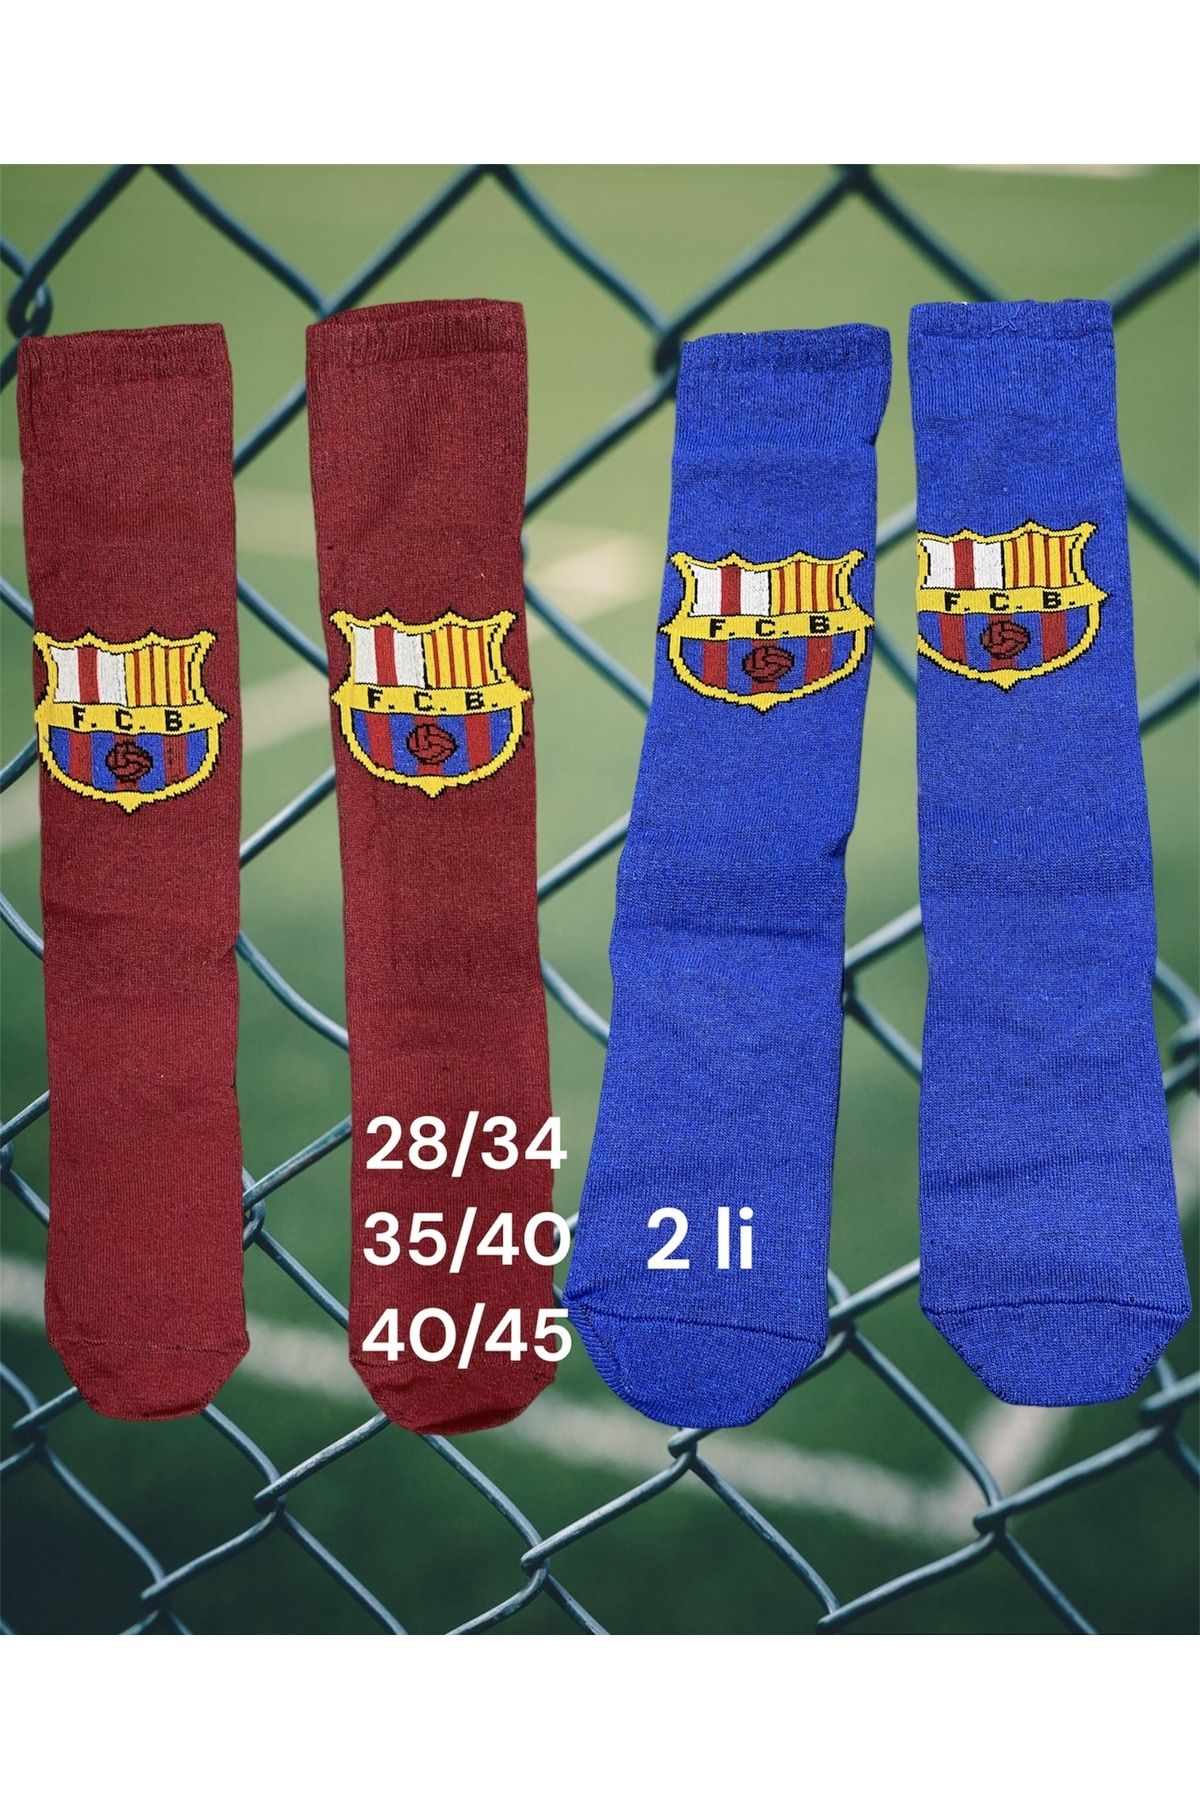 Suq giyim Futbol Çorabı Tozluk Barcelona 2 Li Paket Çocuk Yetiştin